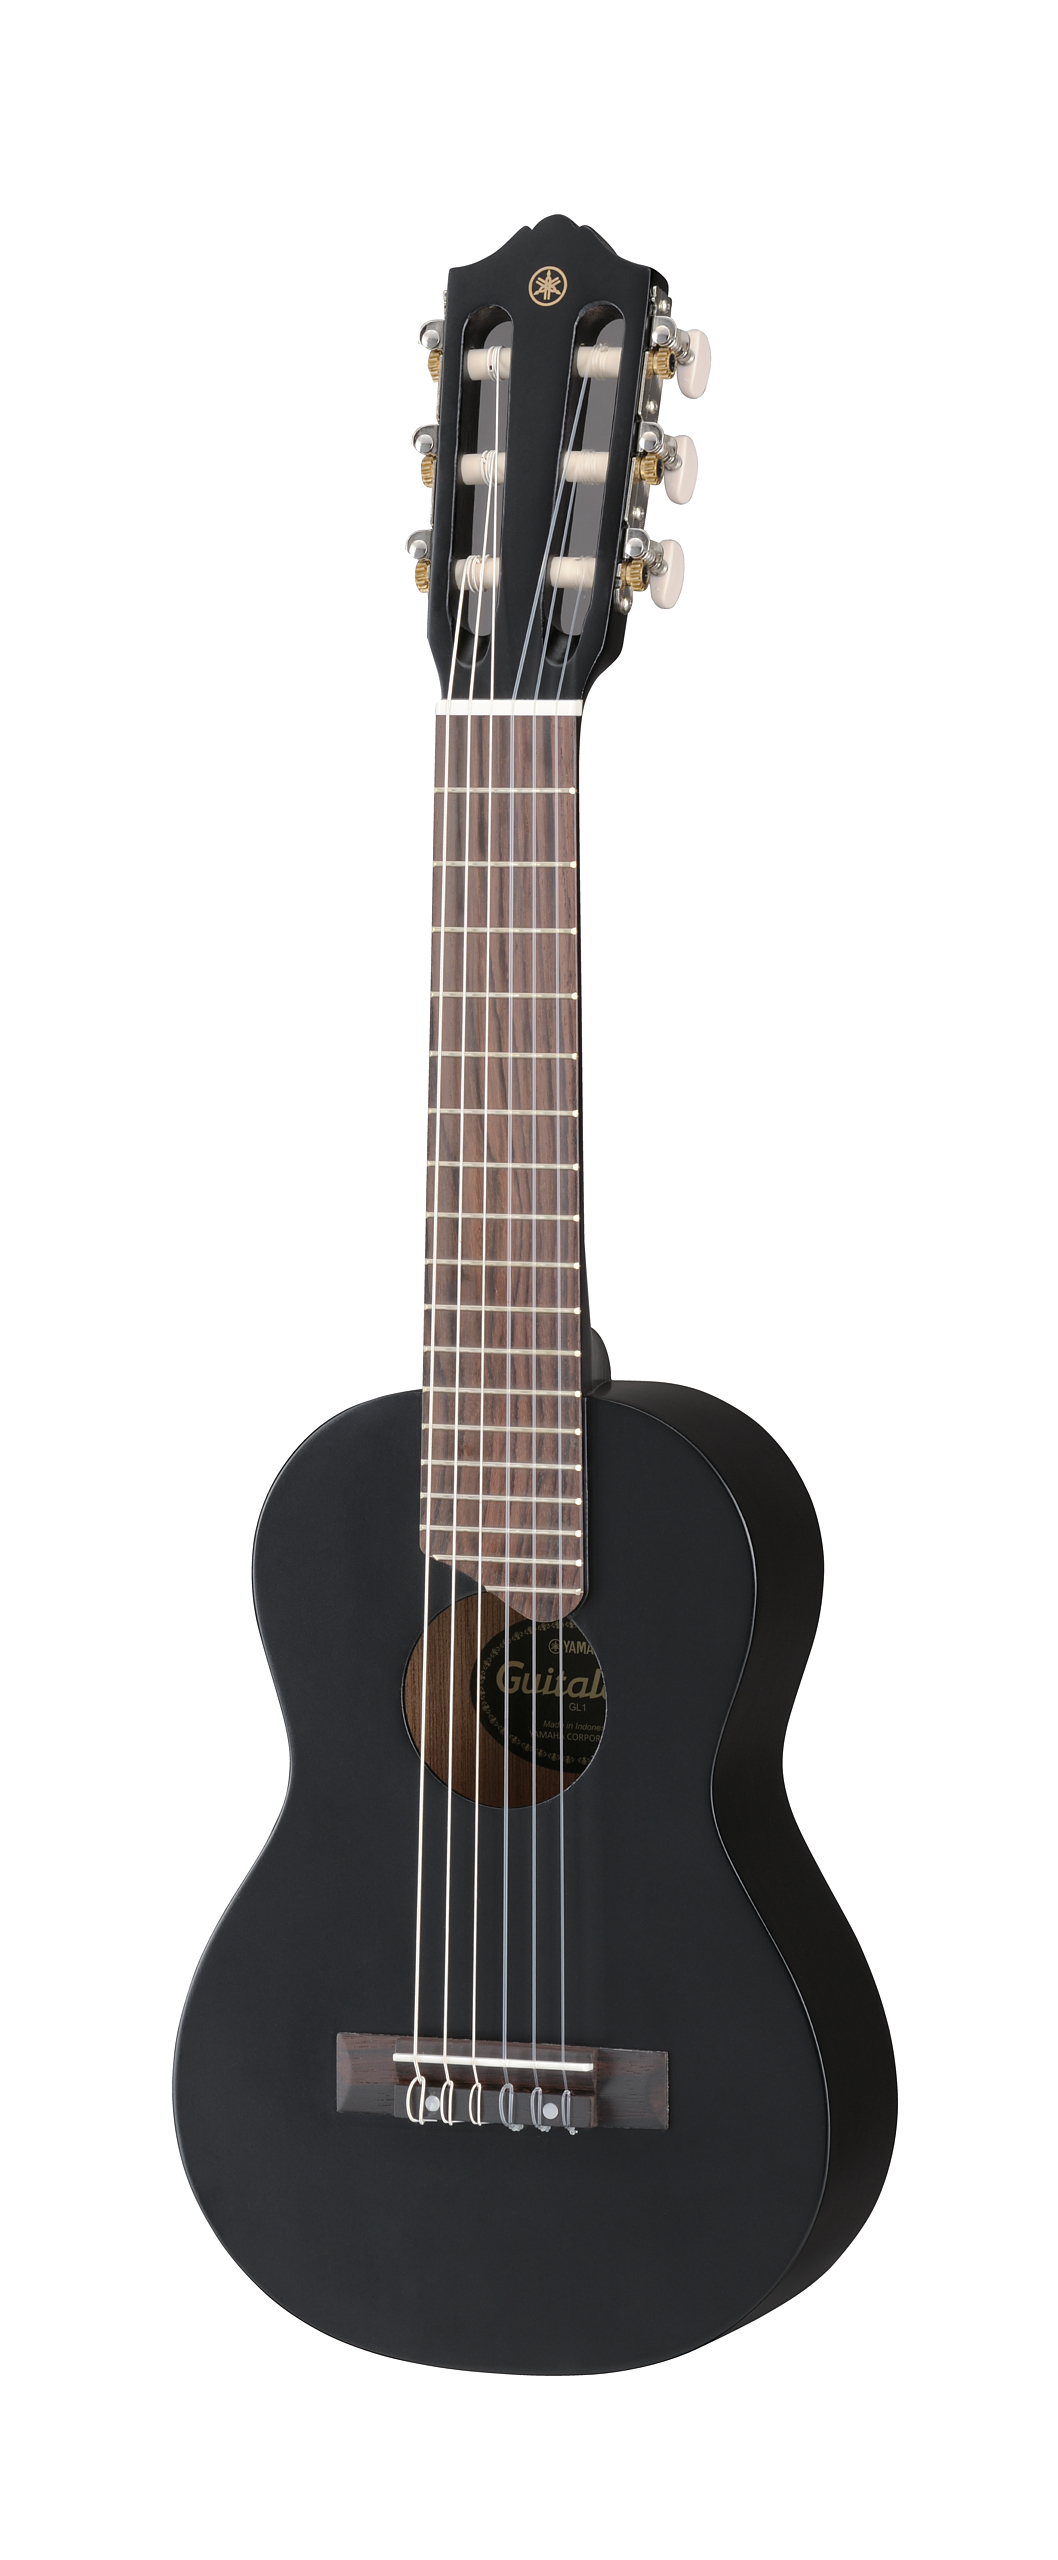 Yamaha GL1 Guitarlele Black